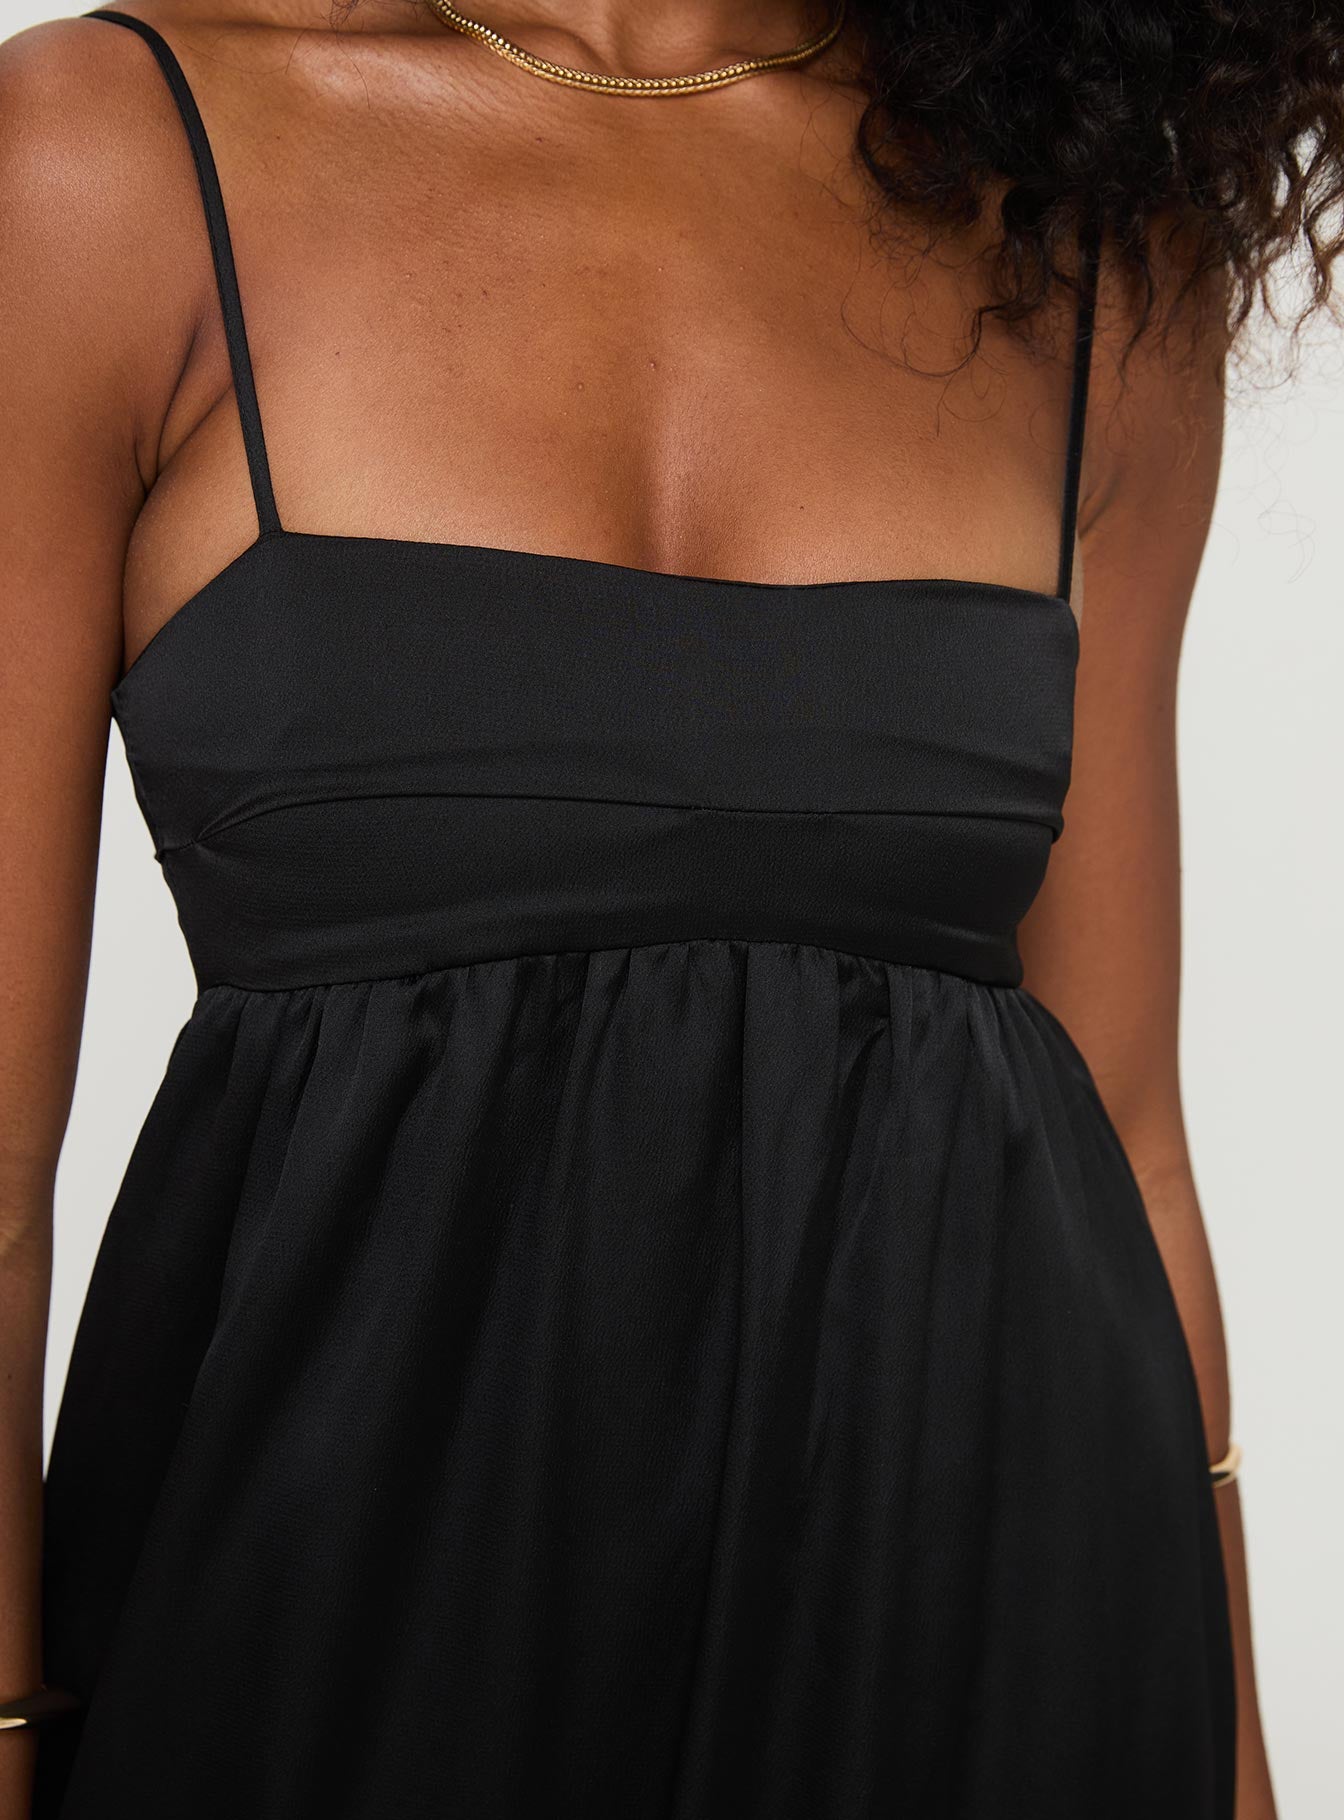 Shop Formal Dress - Ortega Maxi Dress Black featured image